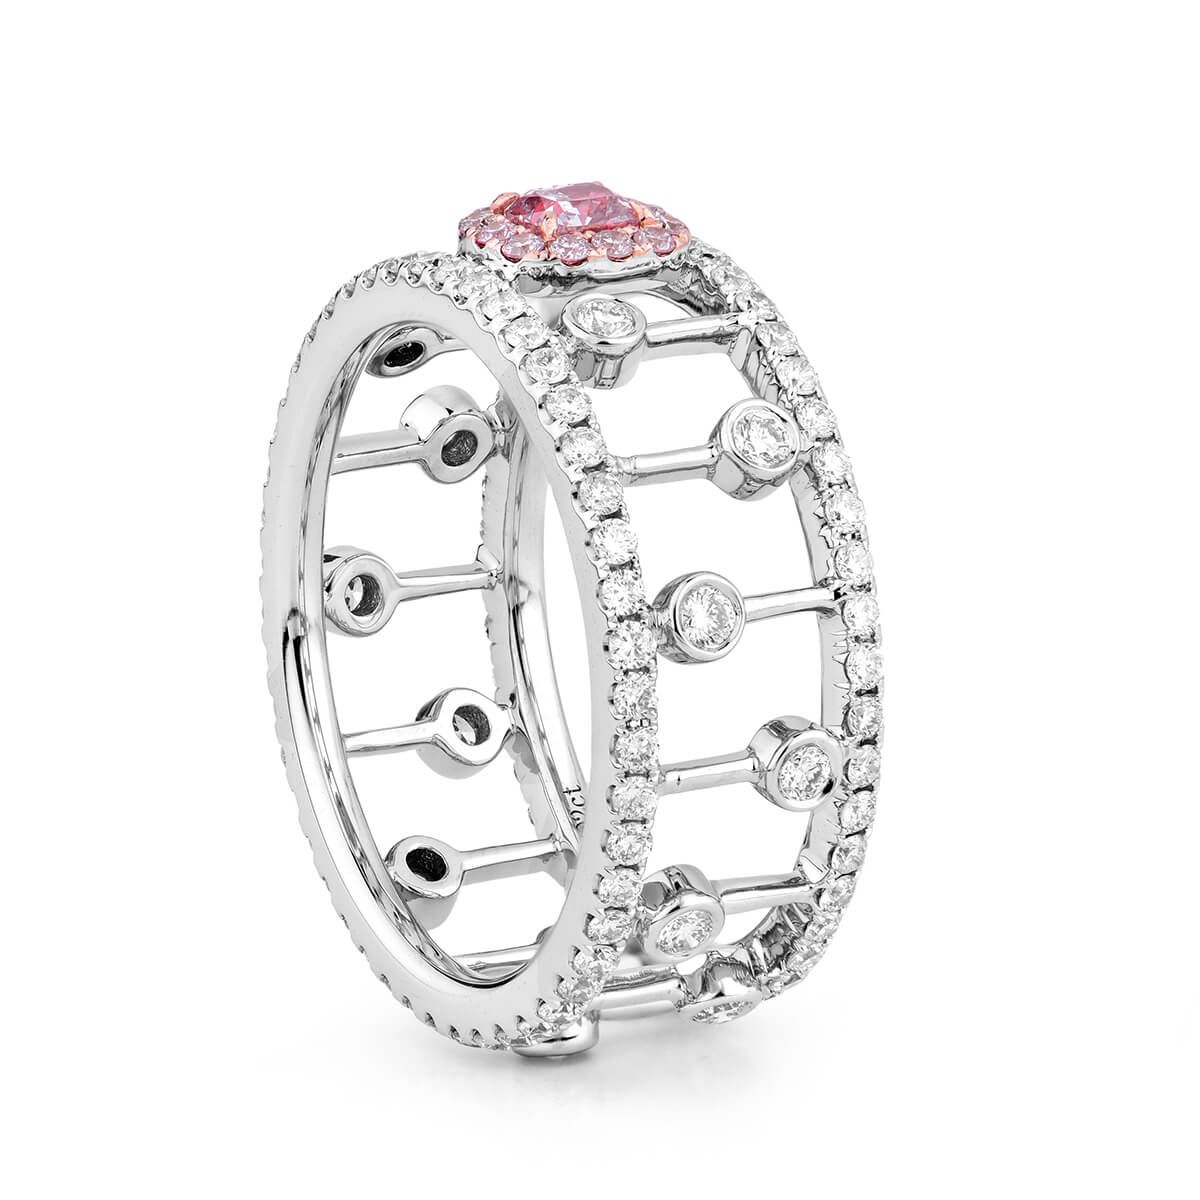 Light Pink Diamond Ring, 0.19 Ct. (1.11 Ct. TW), Cushion shape, GIA Certified, 2191256371